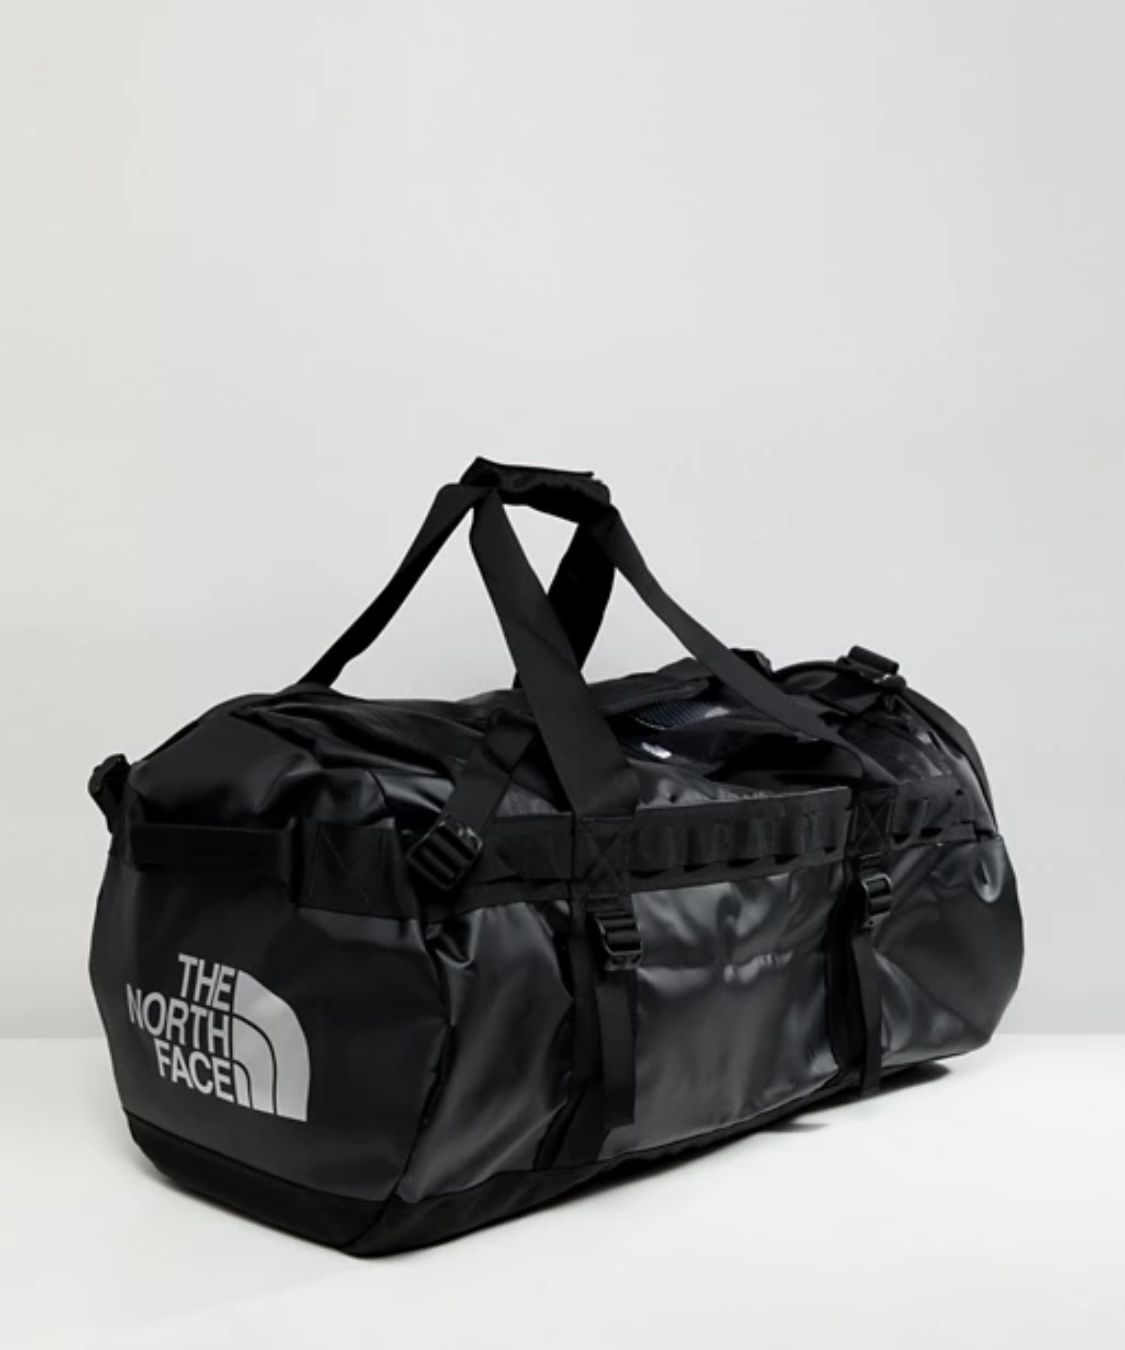 The North Face Base Camp medium duffel bag